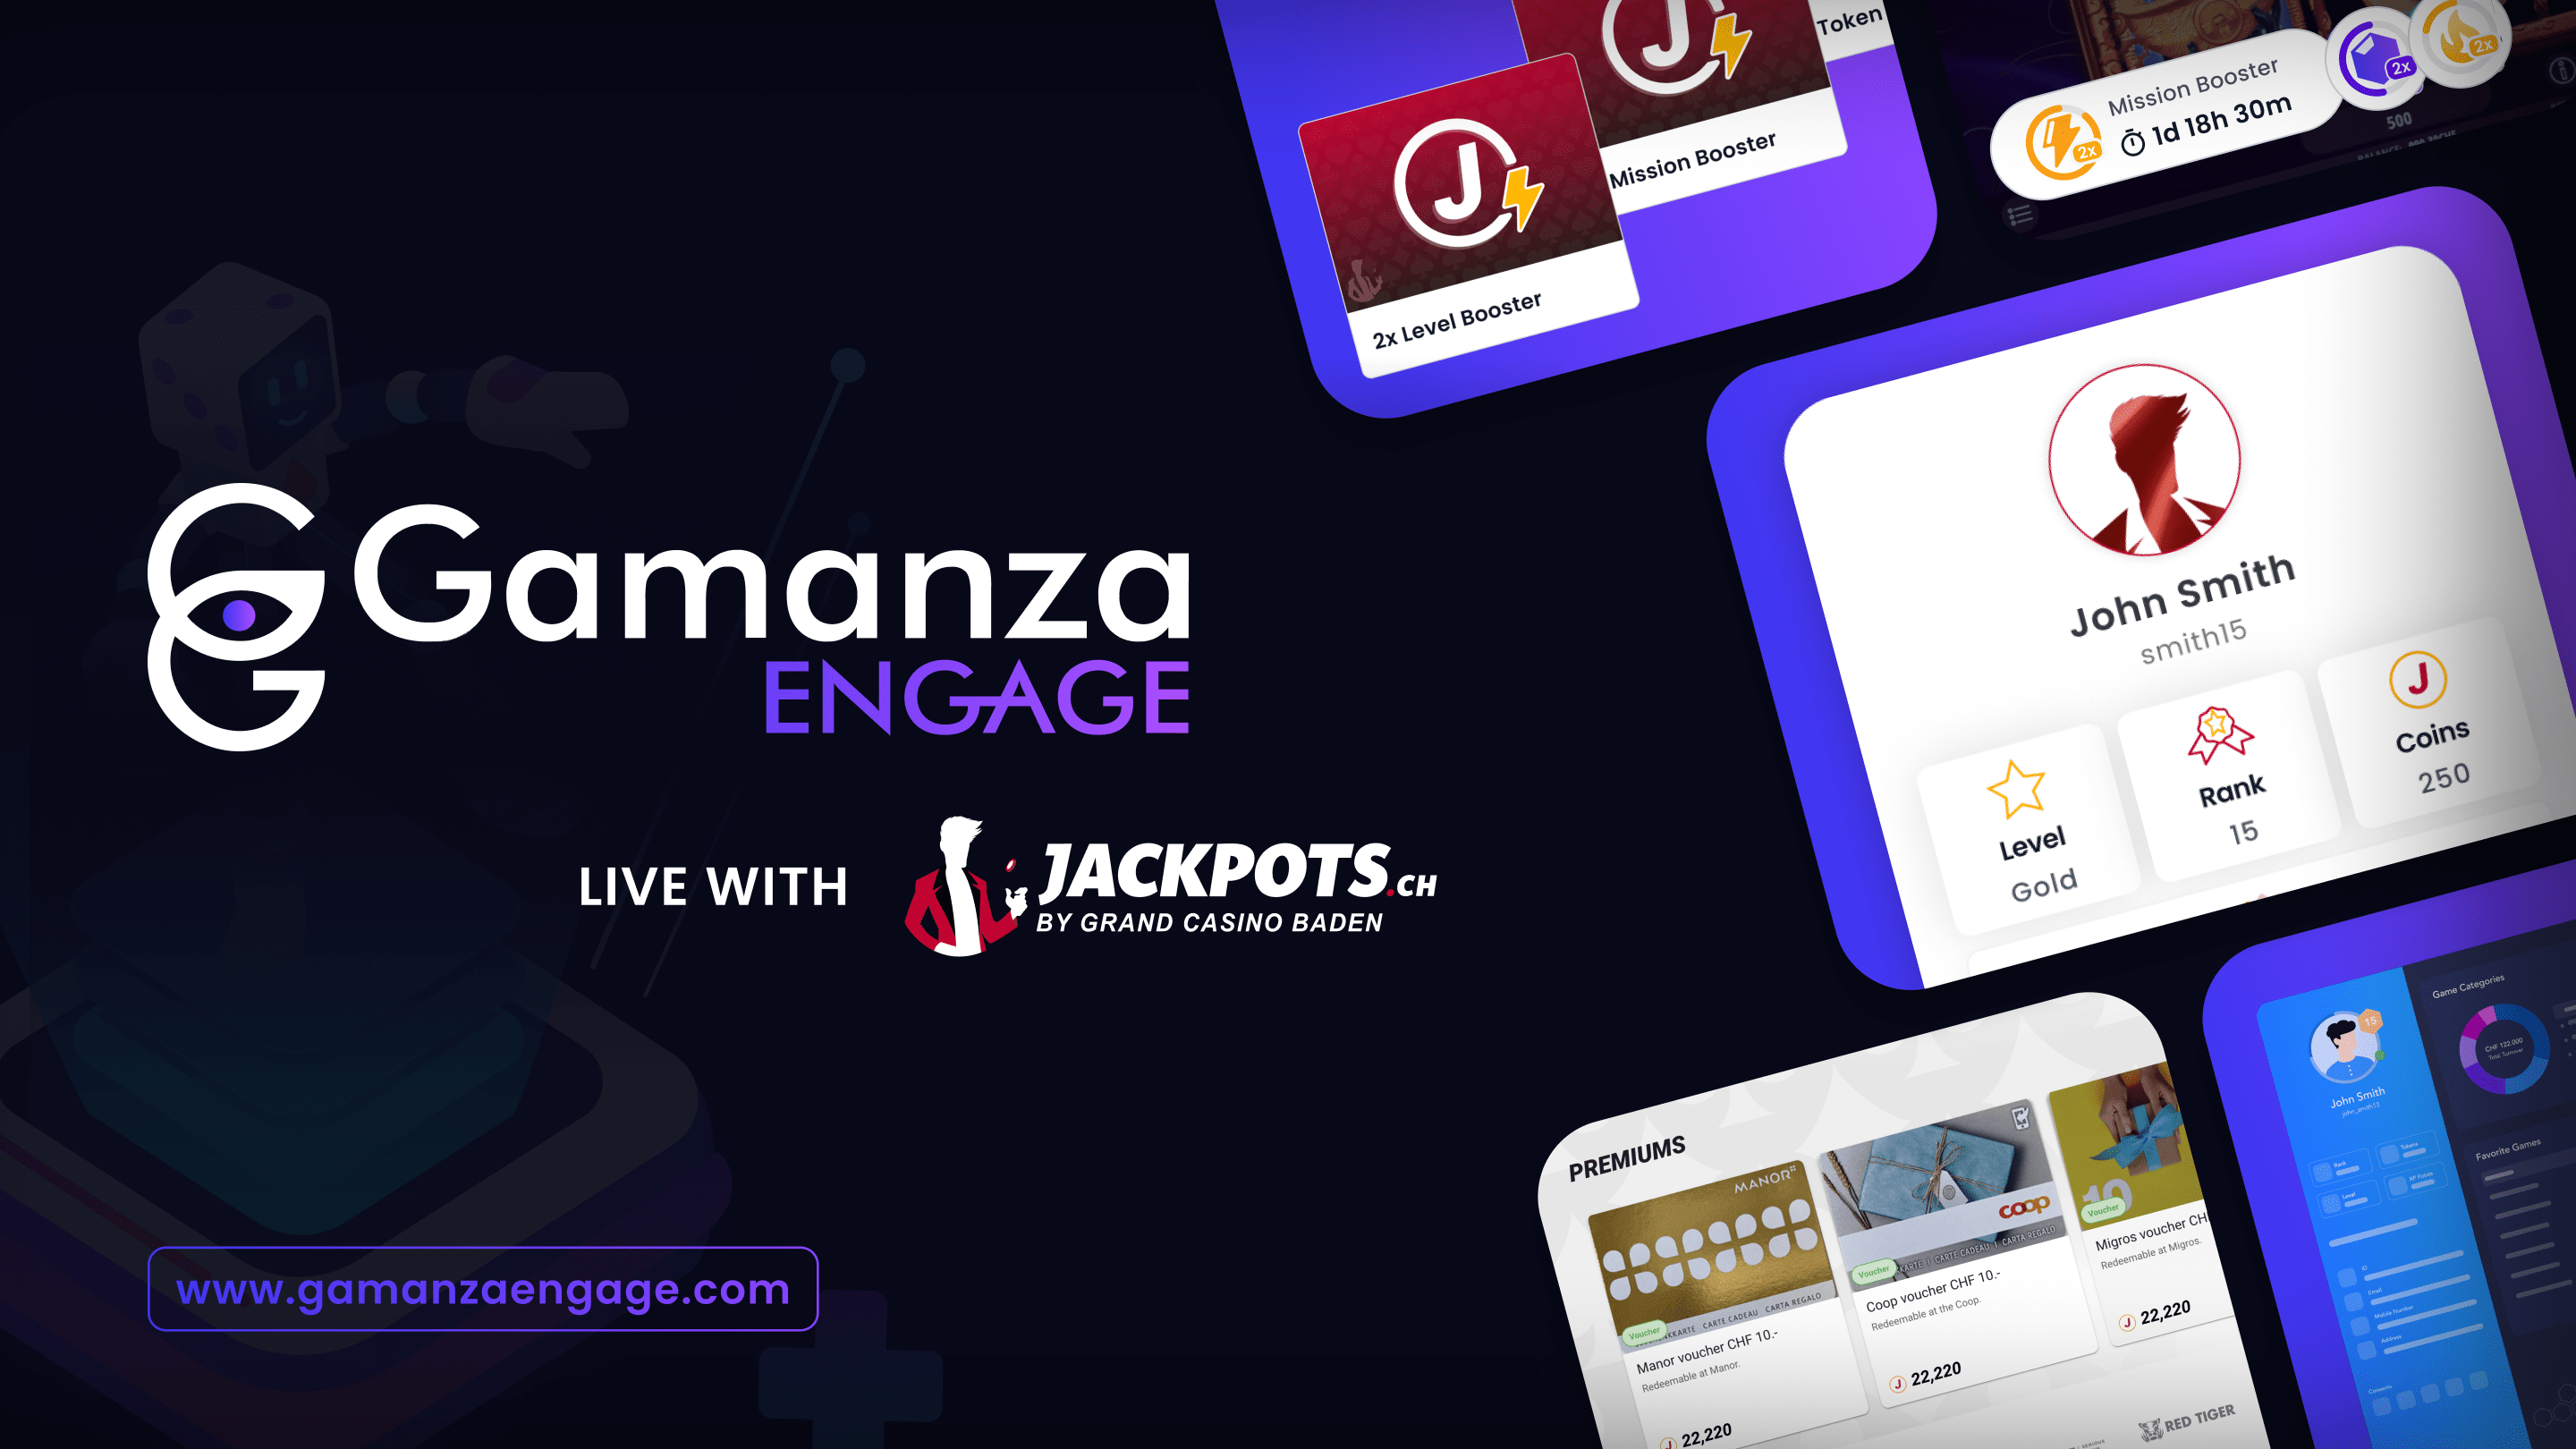 Gamanza powers jackpots.ch loyalty program